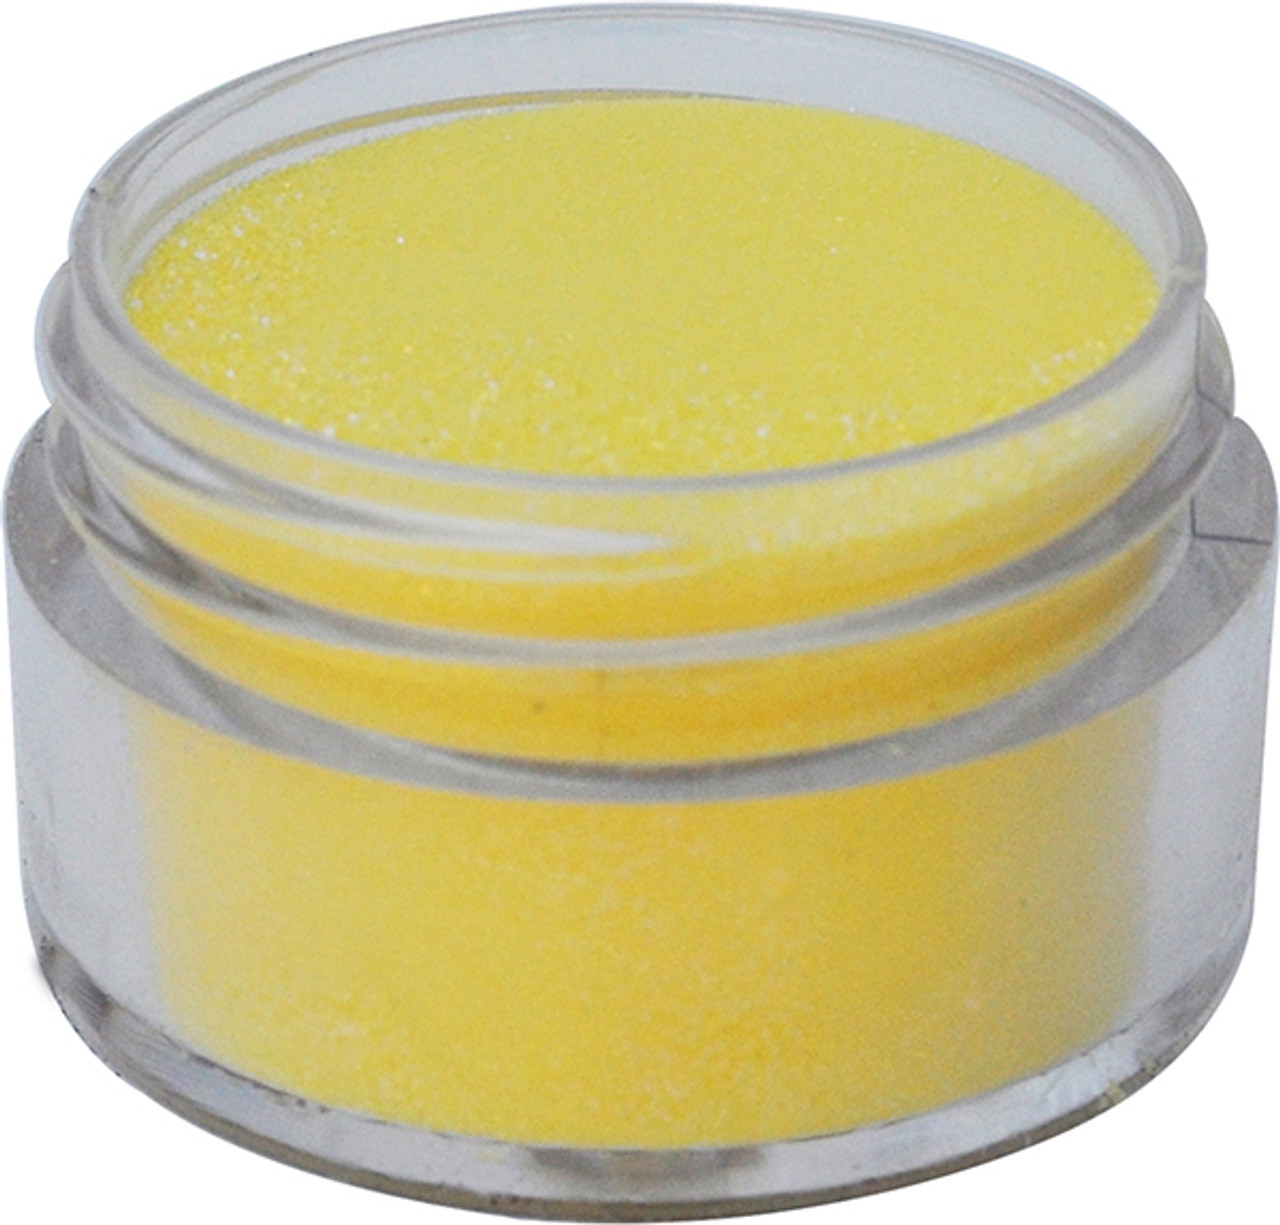 U2 GLITTER Color Powders - Yellow -  4 oz